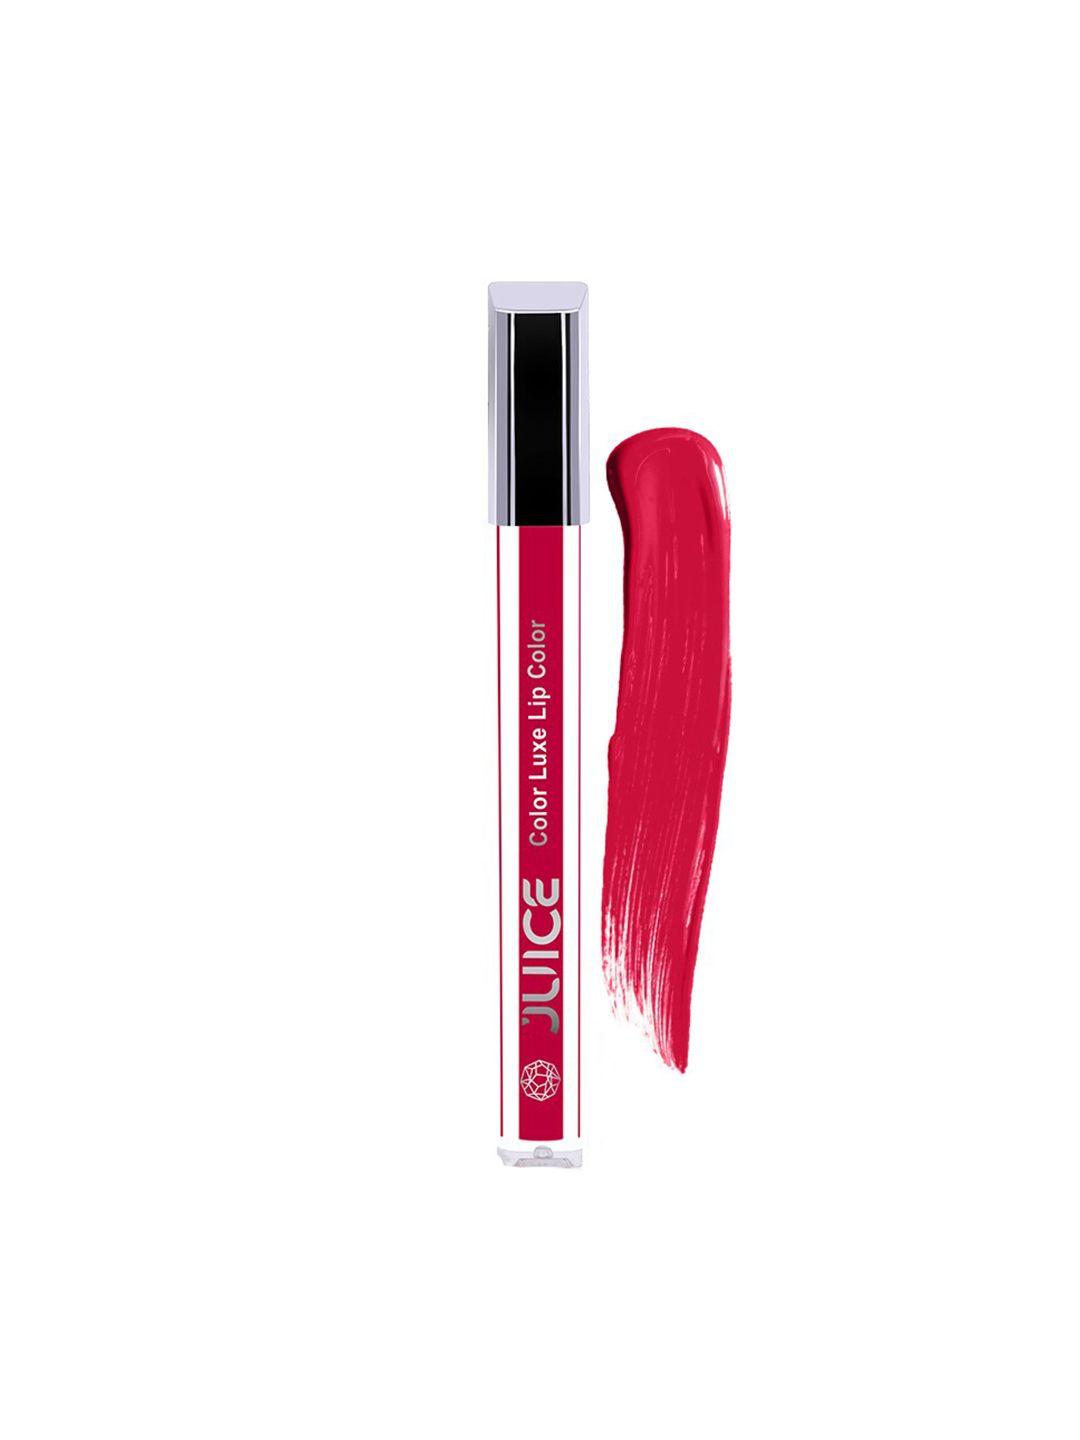 juice color luxe hd shine & moisturizing lip color with bio retinol 2.5ml - warm red g02